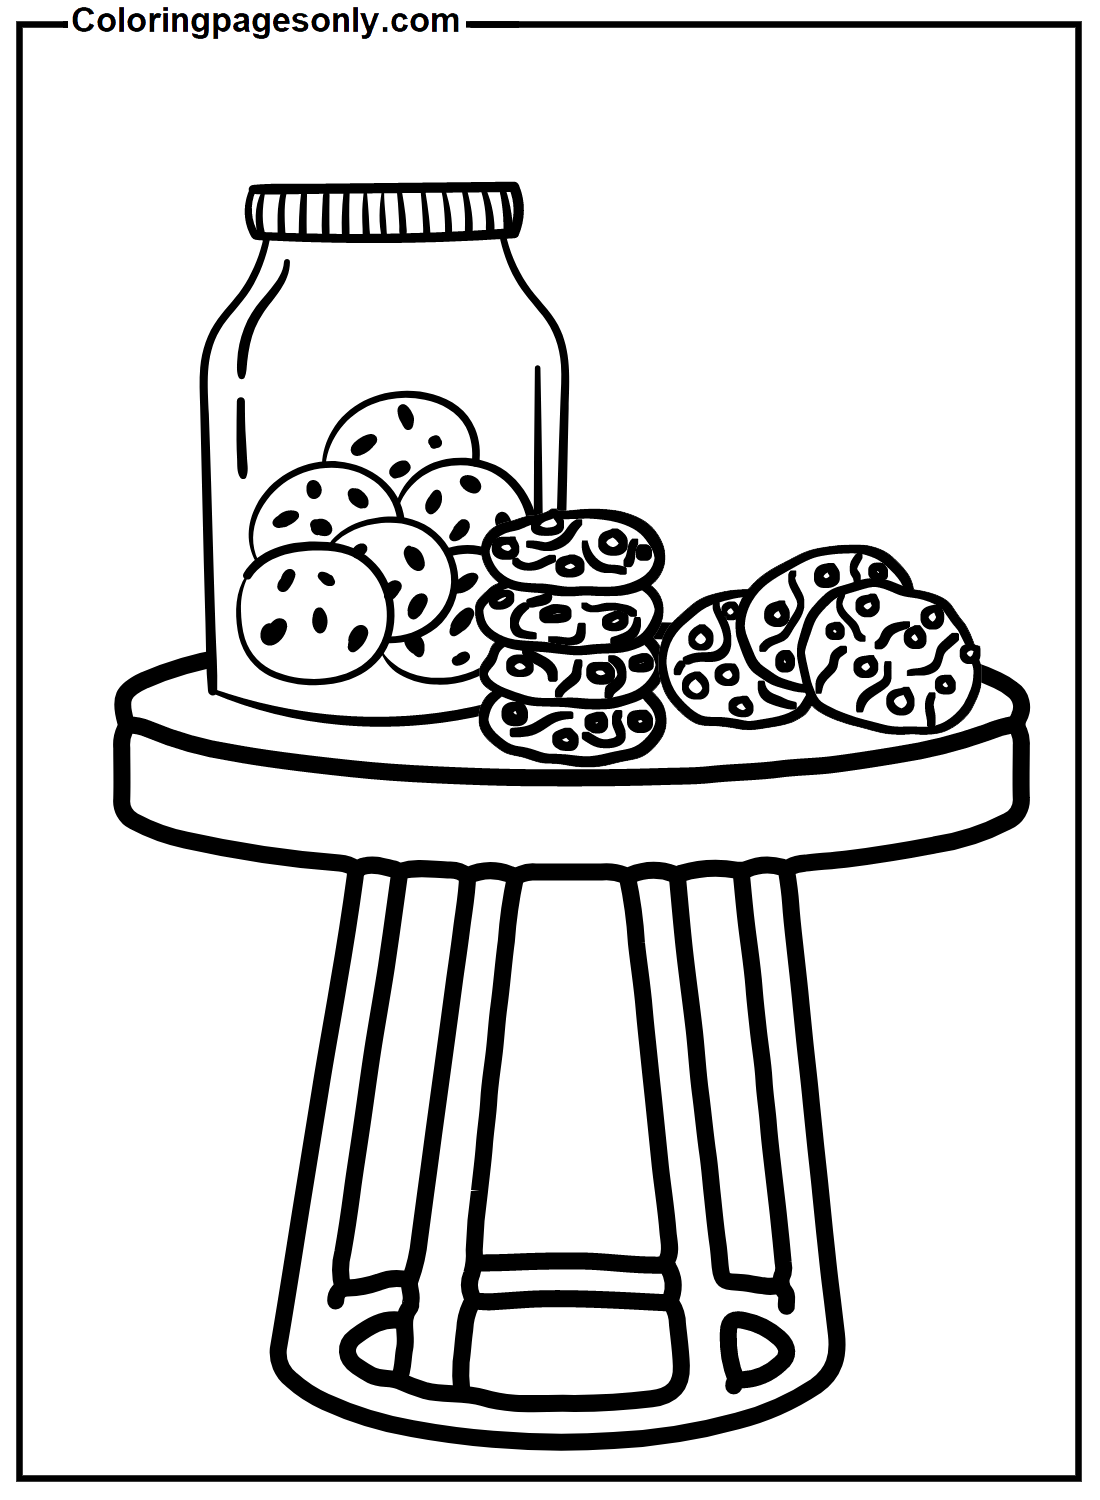 Jar of Cookies Coloring Pages - Cookie Coloring Pages - Coloring Pages For  Kids And Adults